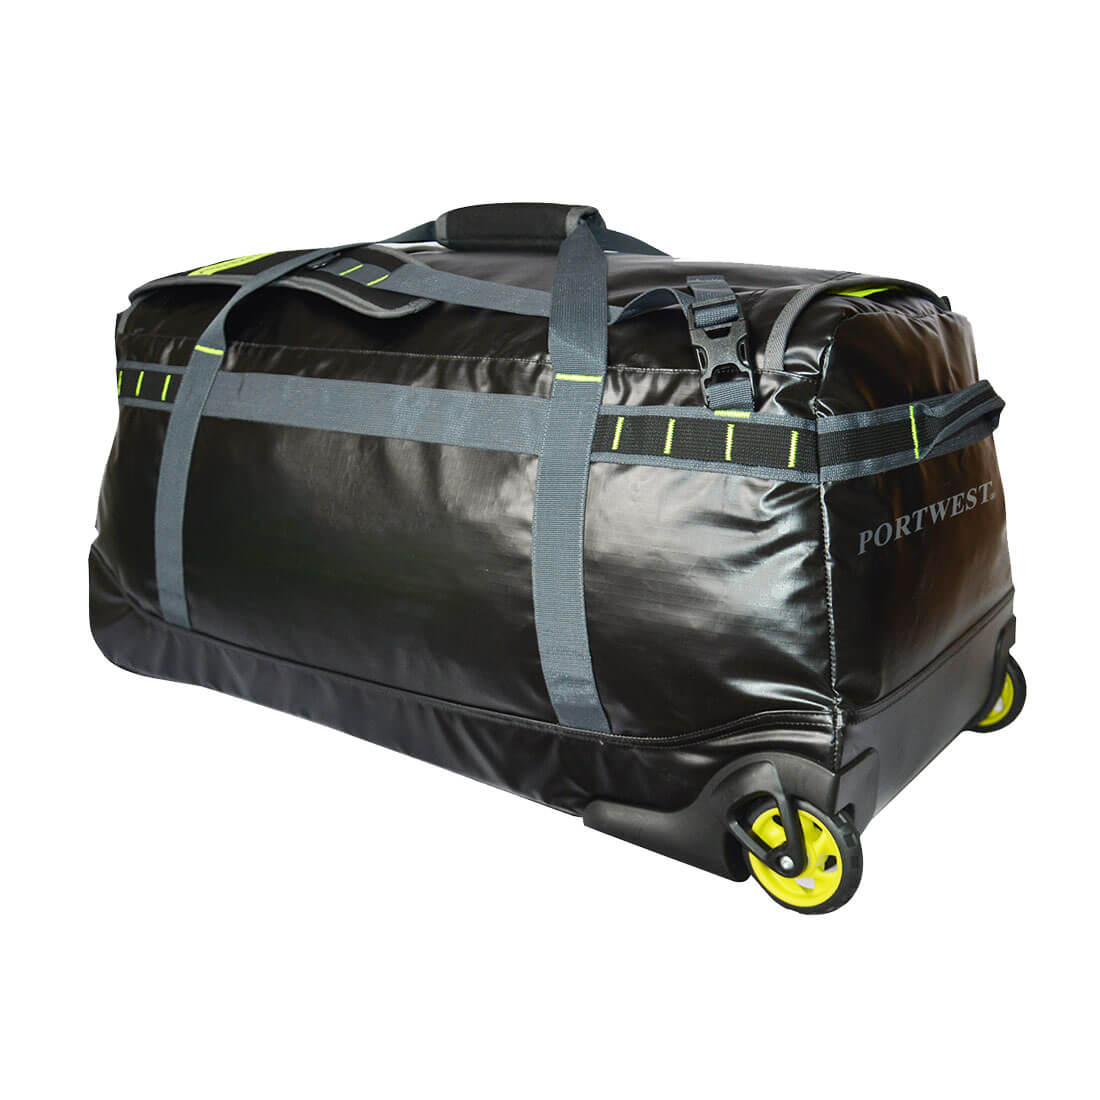 PW3 100L Water-resistant Duffle Trolley Bag, Morgans PW